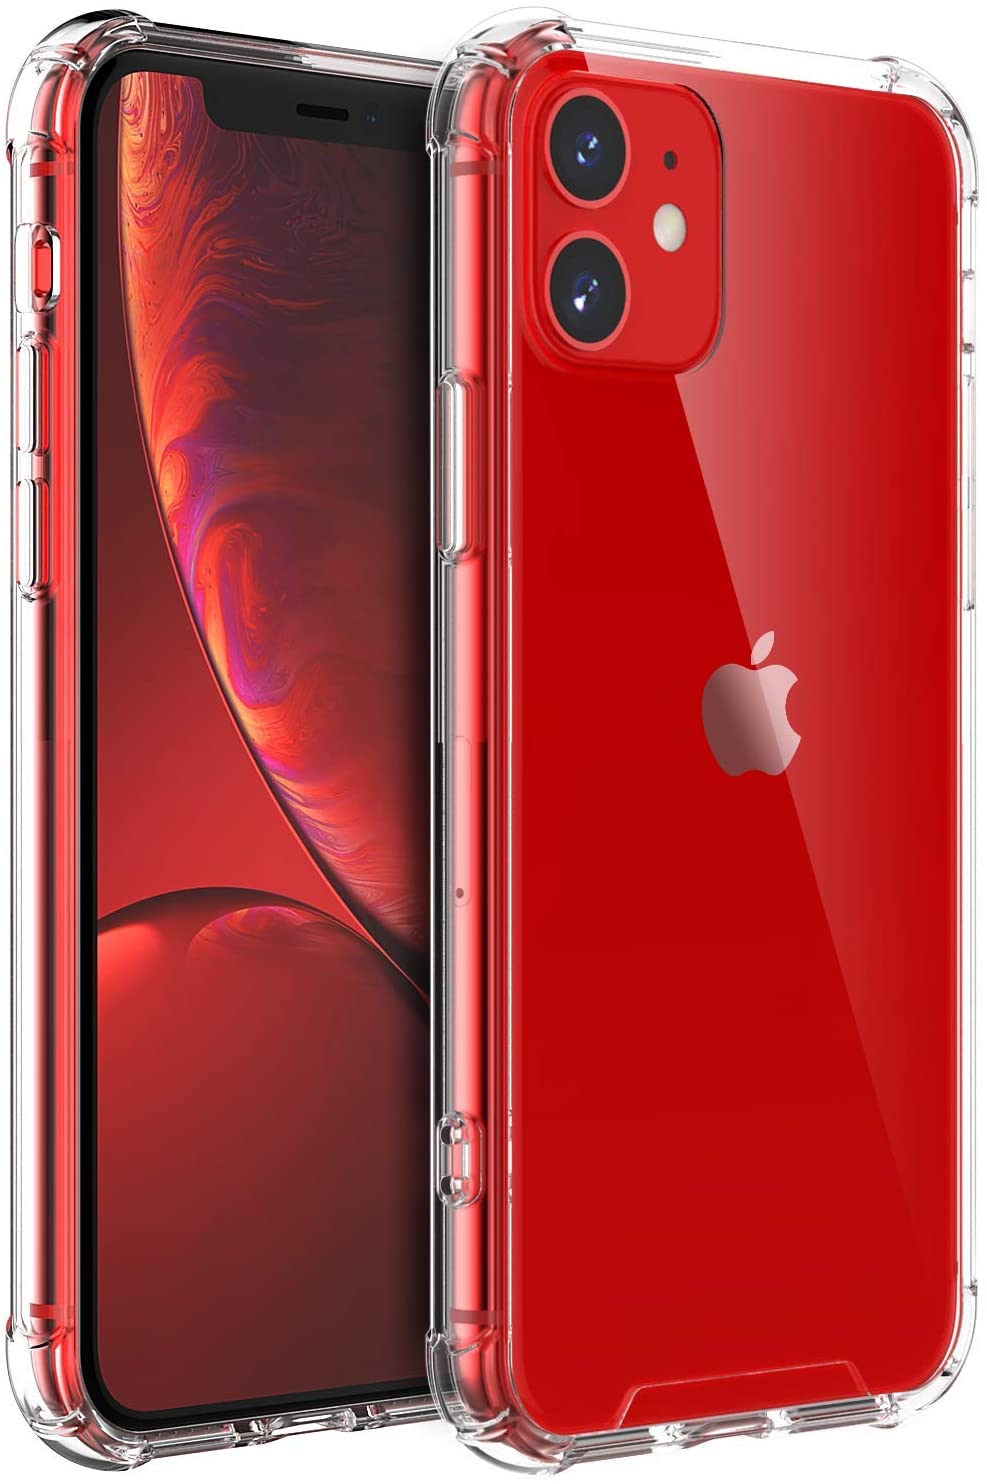 Carcasa Antigolpe iPhone 11 Transparente